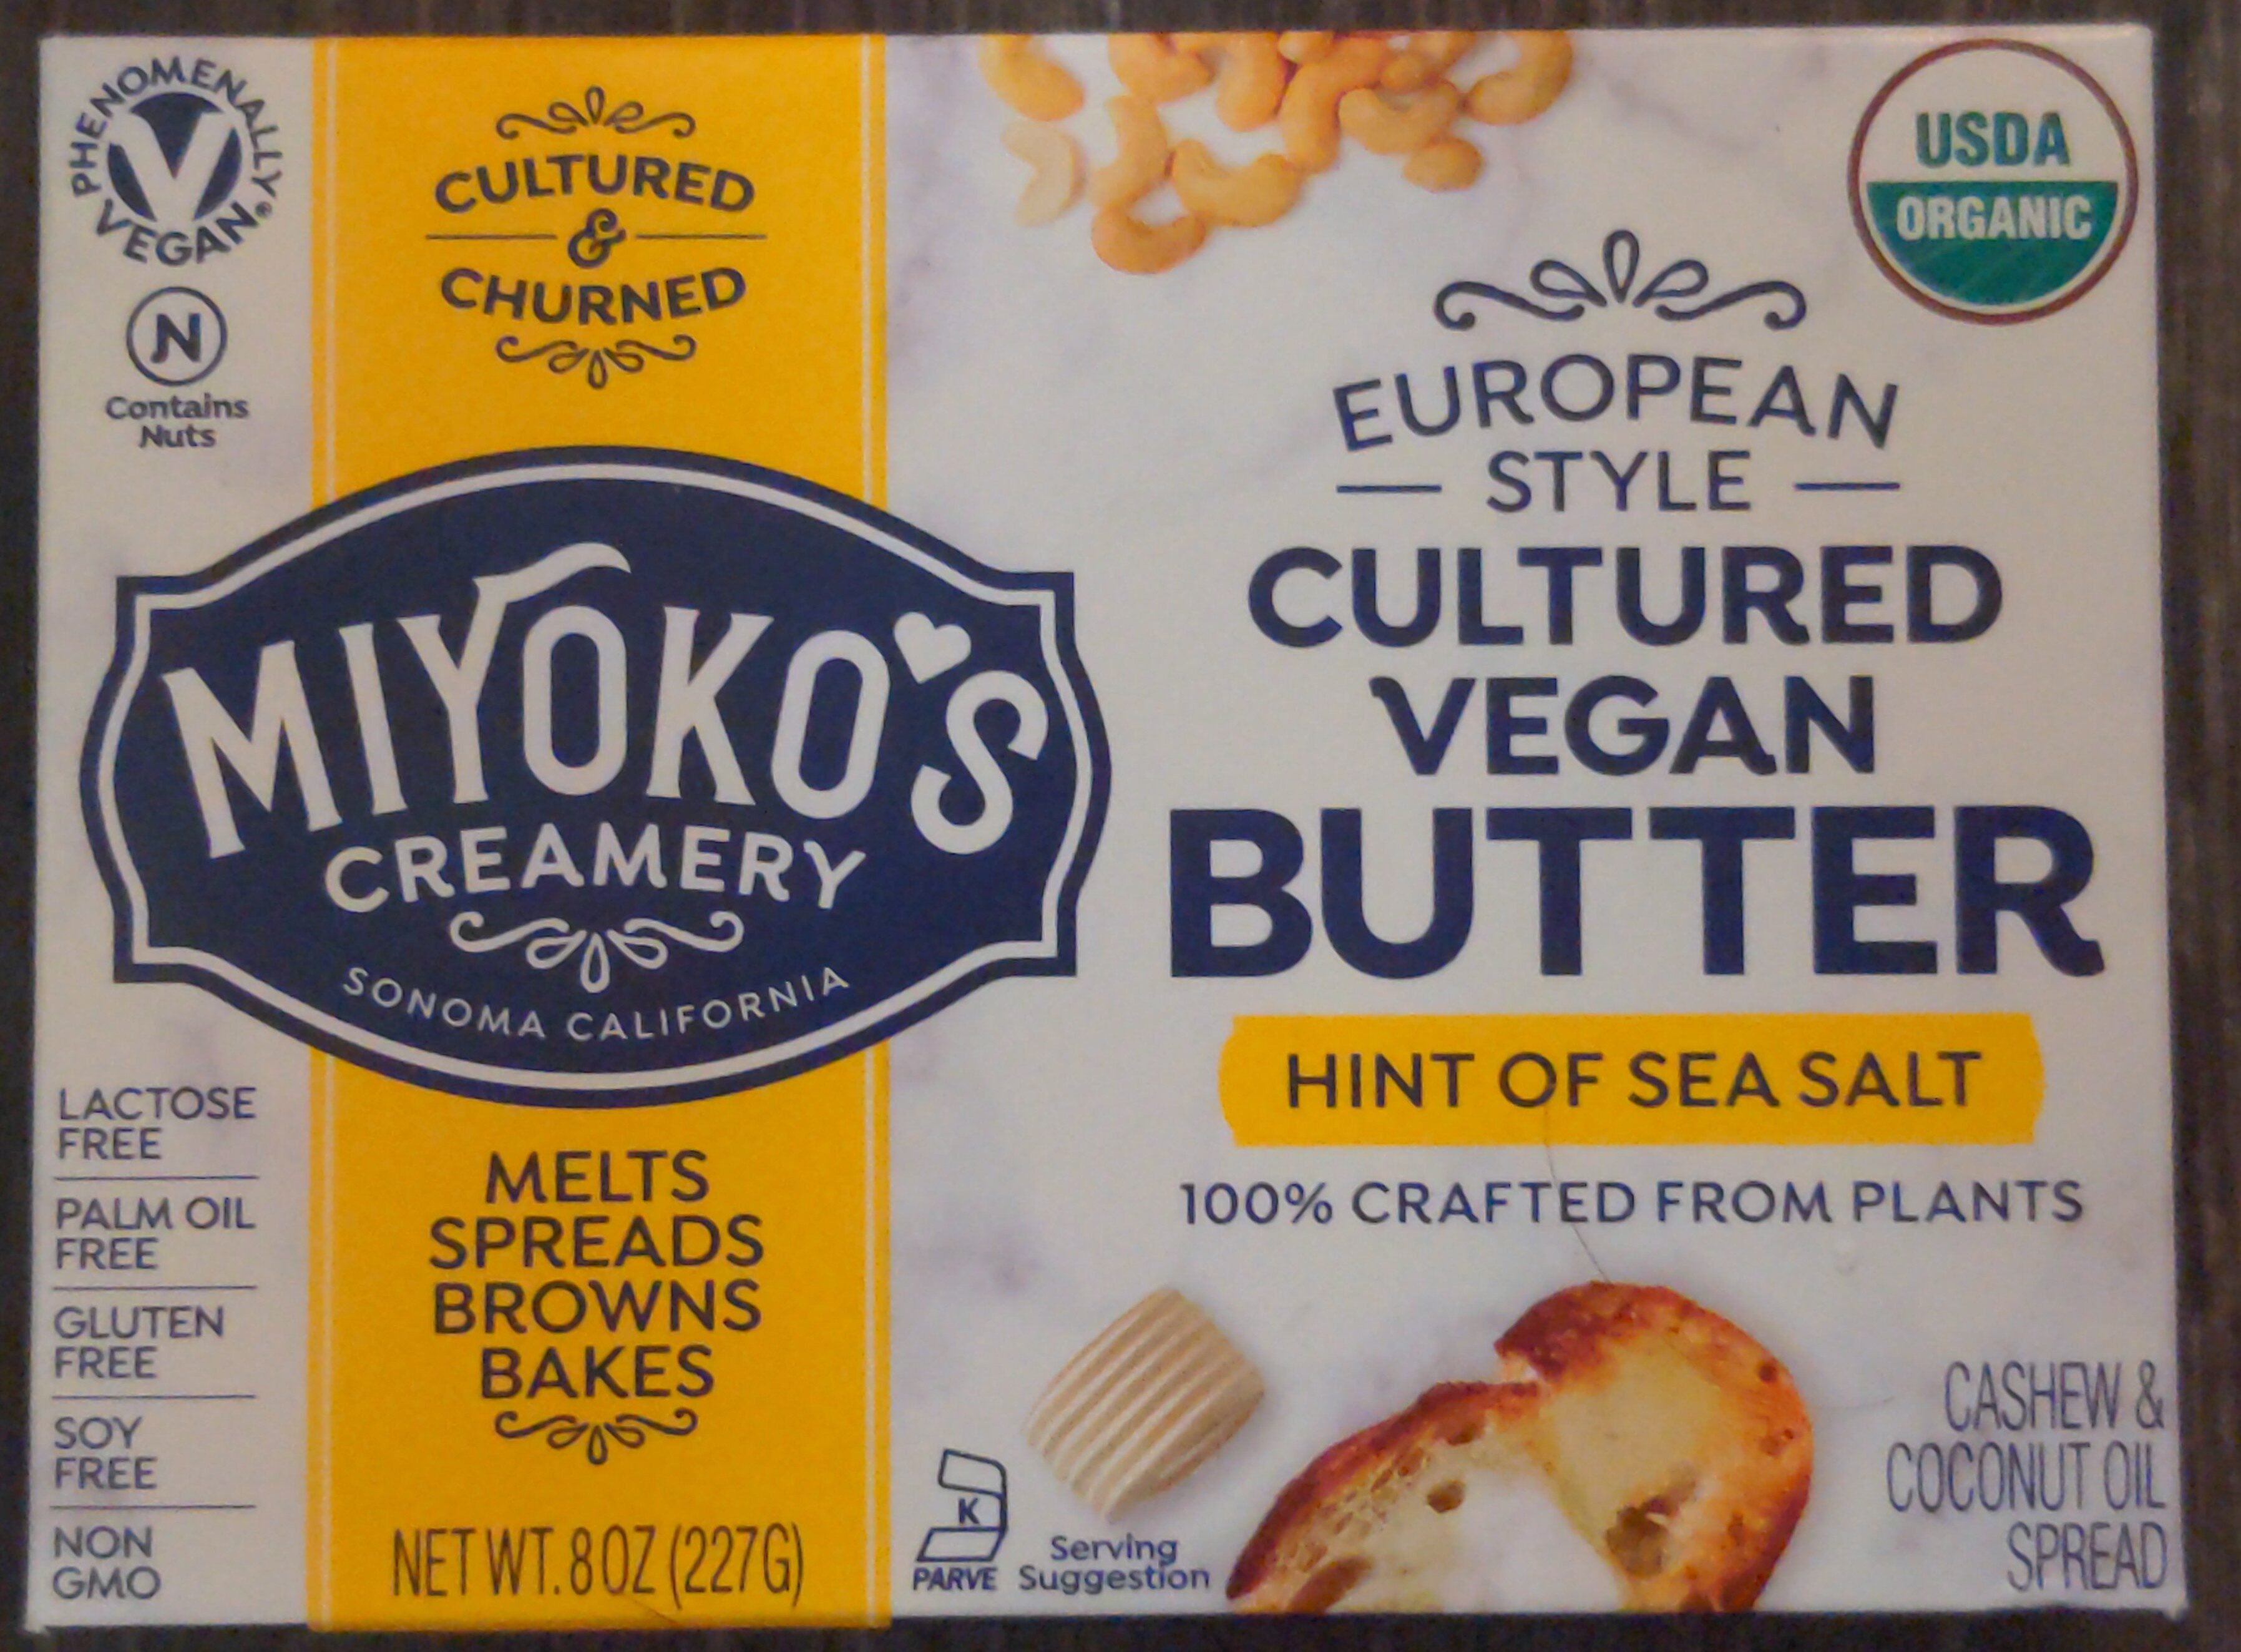 European style cultured vegan butter, european style - Producto - en